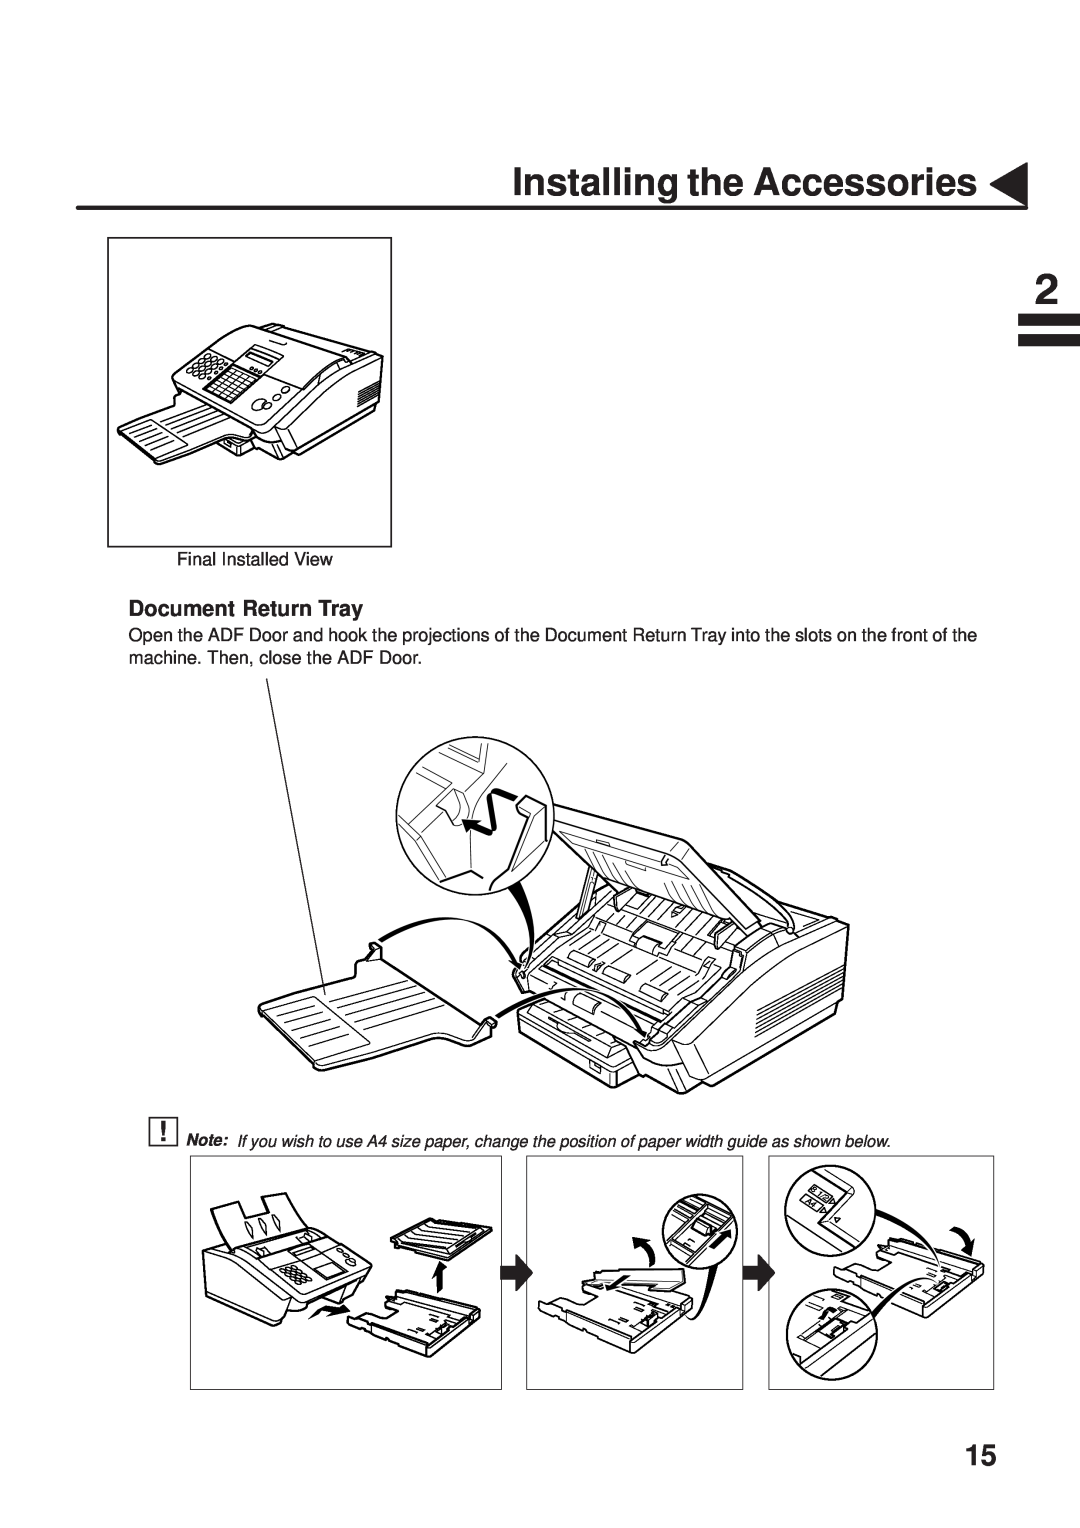 Panasonic UF-333 manual Installing the Accessories, Document Return Tray 